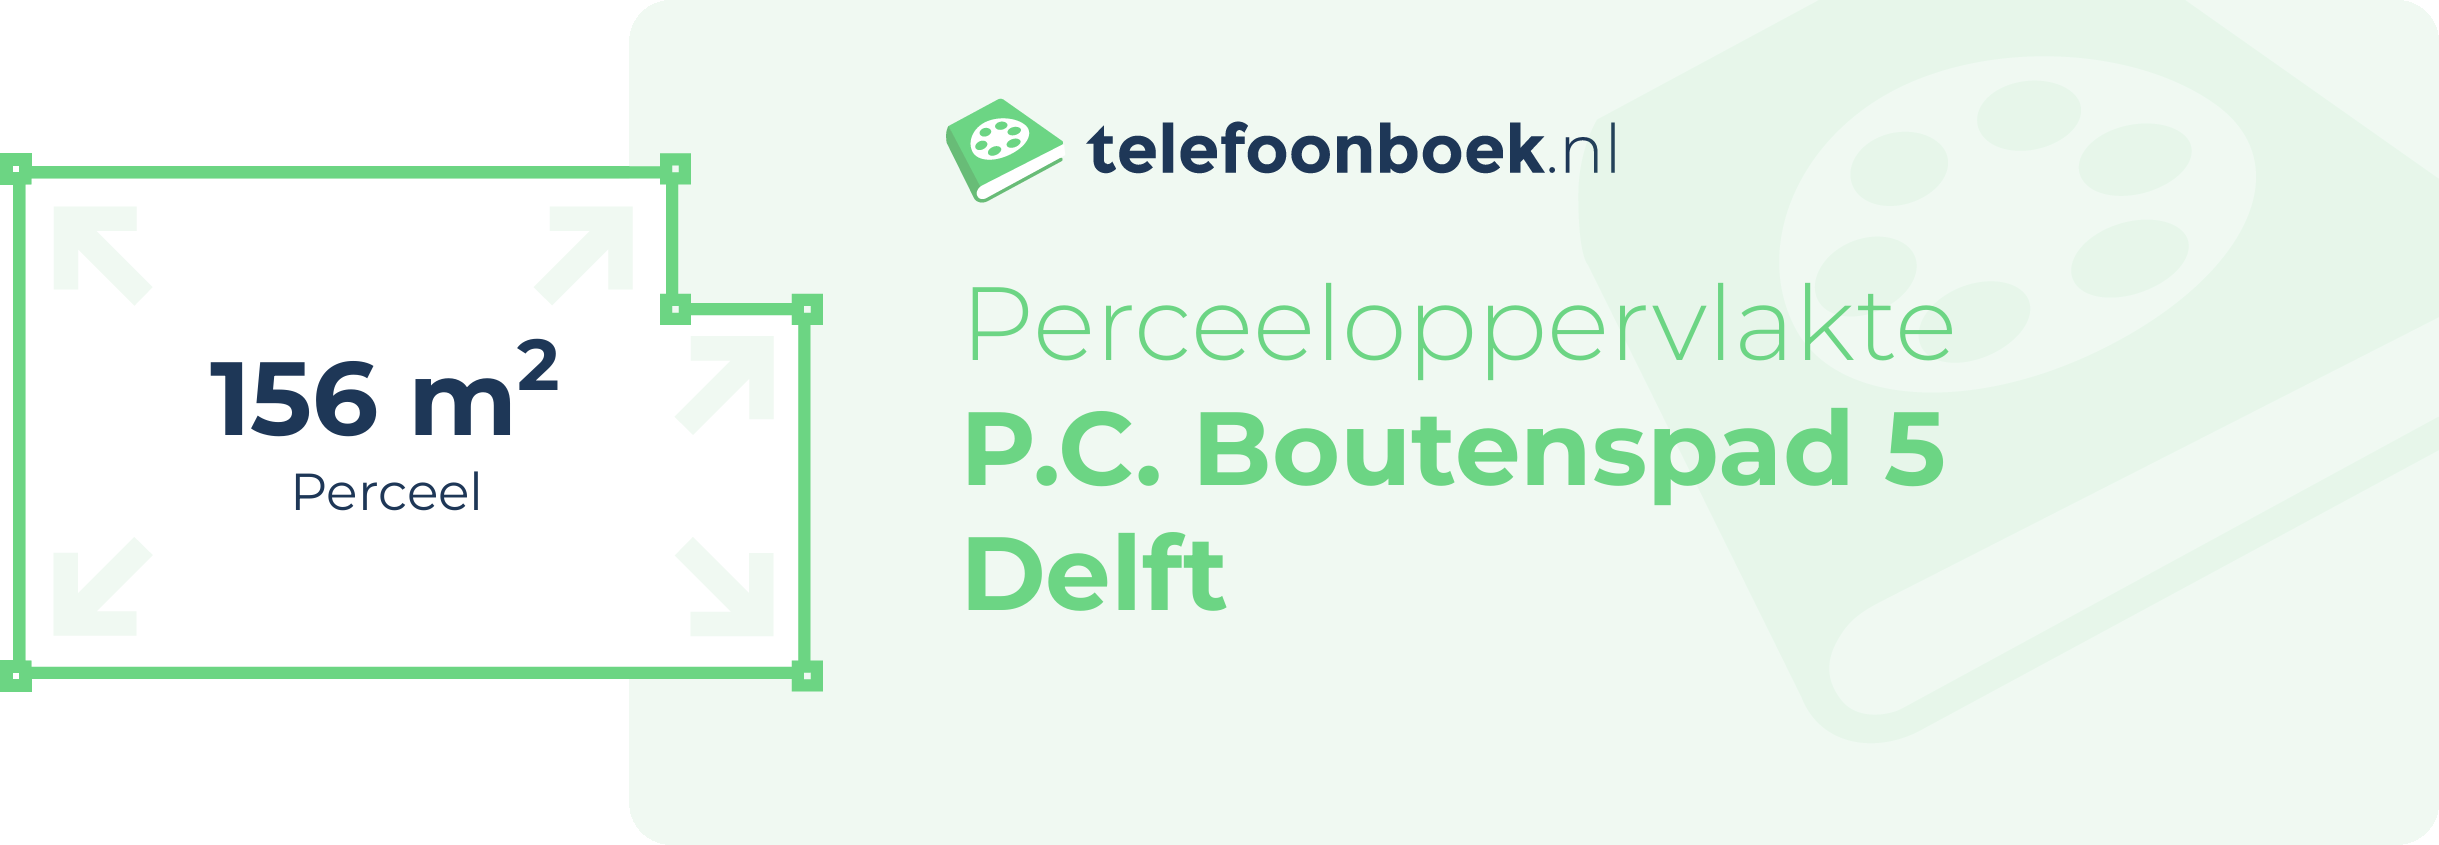 Perceeloppervlakte P.C. Boutenspad 5 Delft